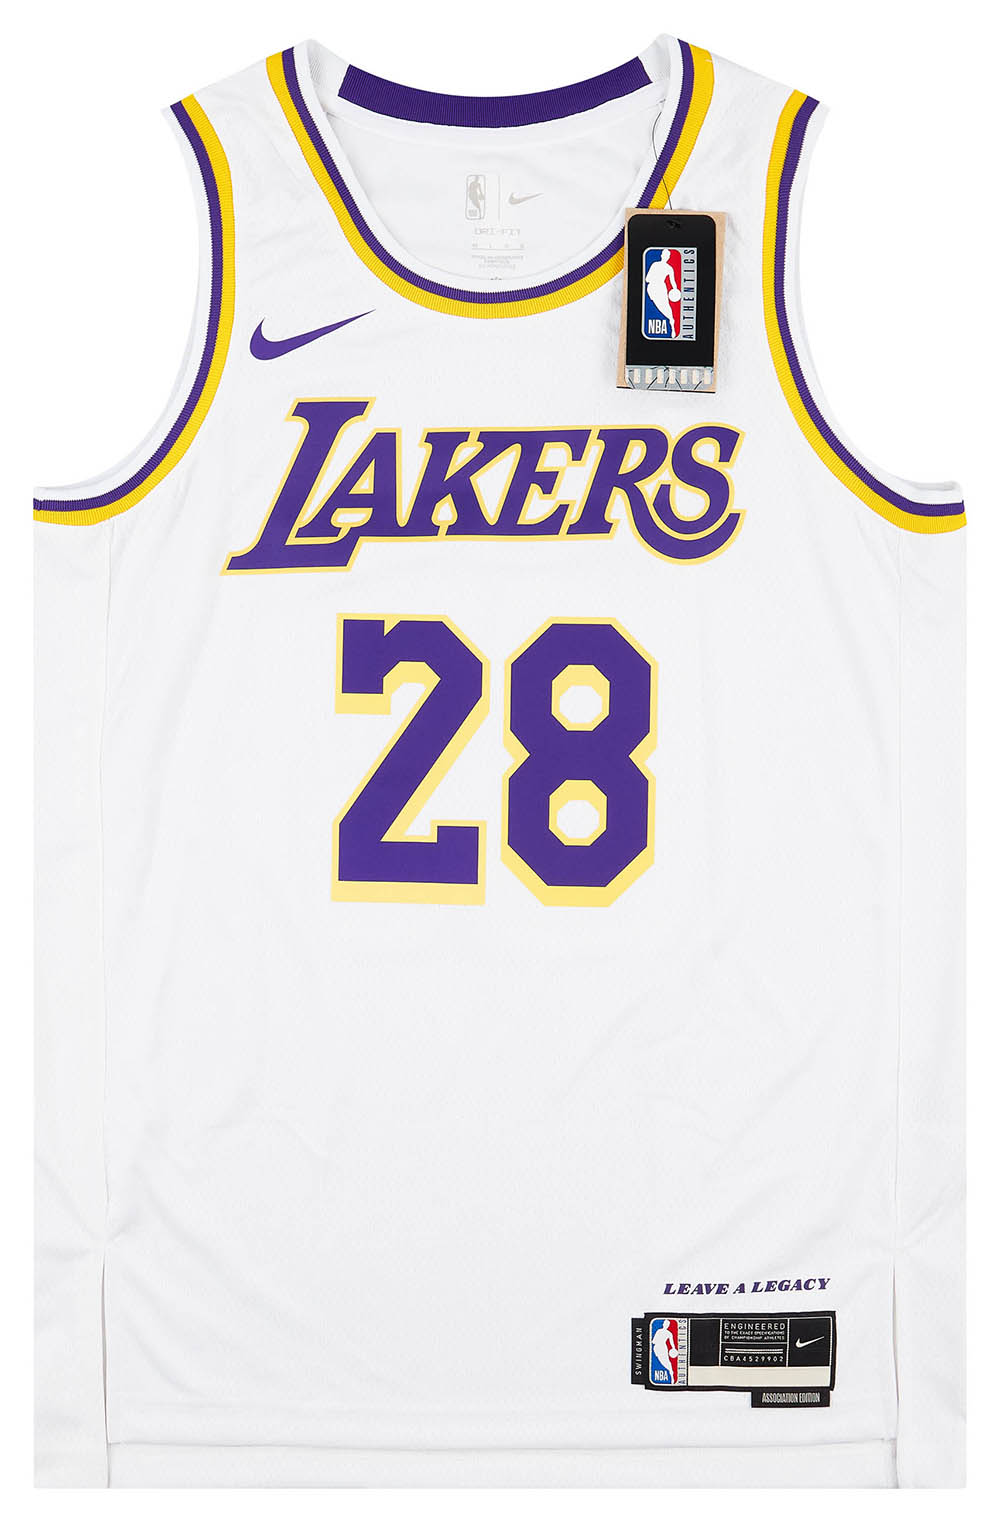 Blui Hachimura Lakers 28 Shirt - Shibtee Clothing